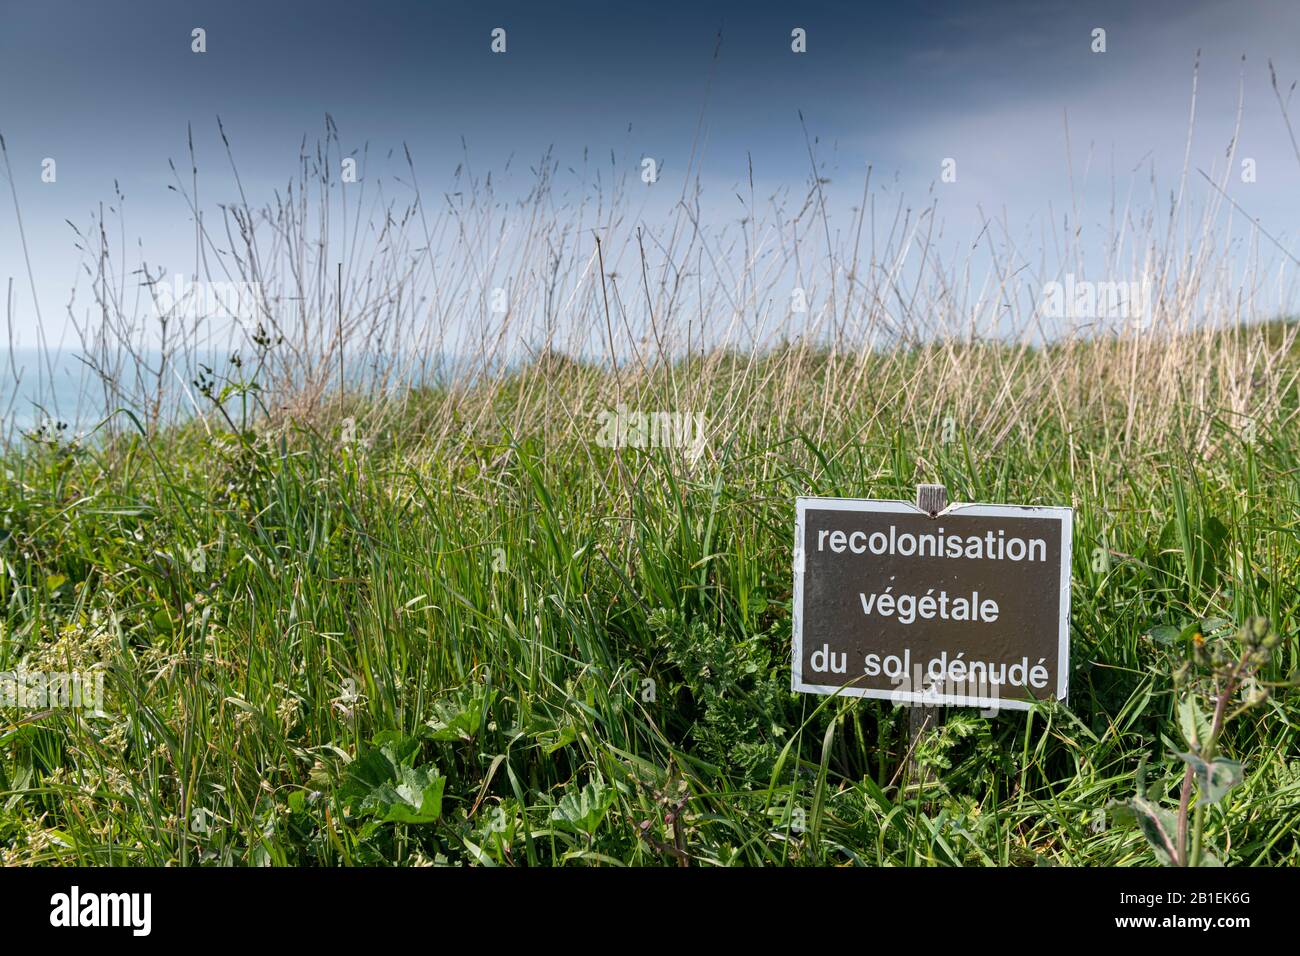 Sign indicating the vegetal recolonization of the soil, Ille et Vilaine, France Stock Photo